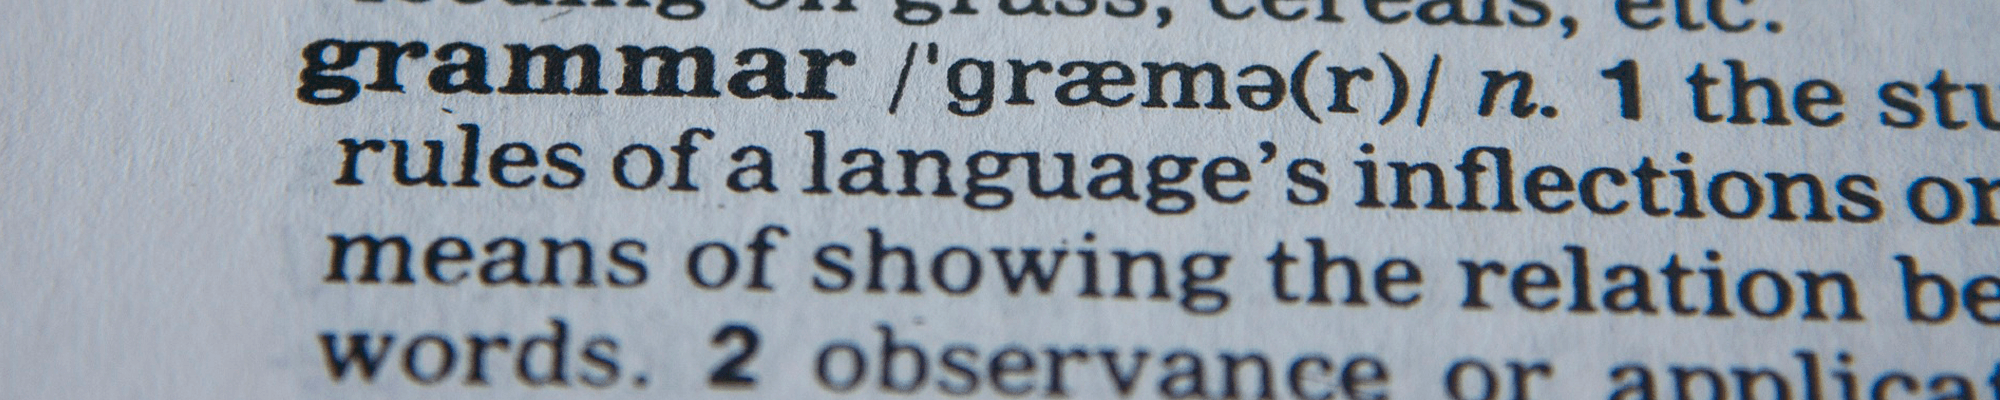 up close dictionary entry for grammar